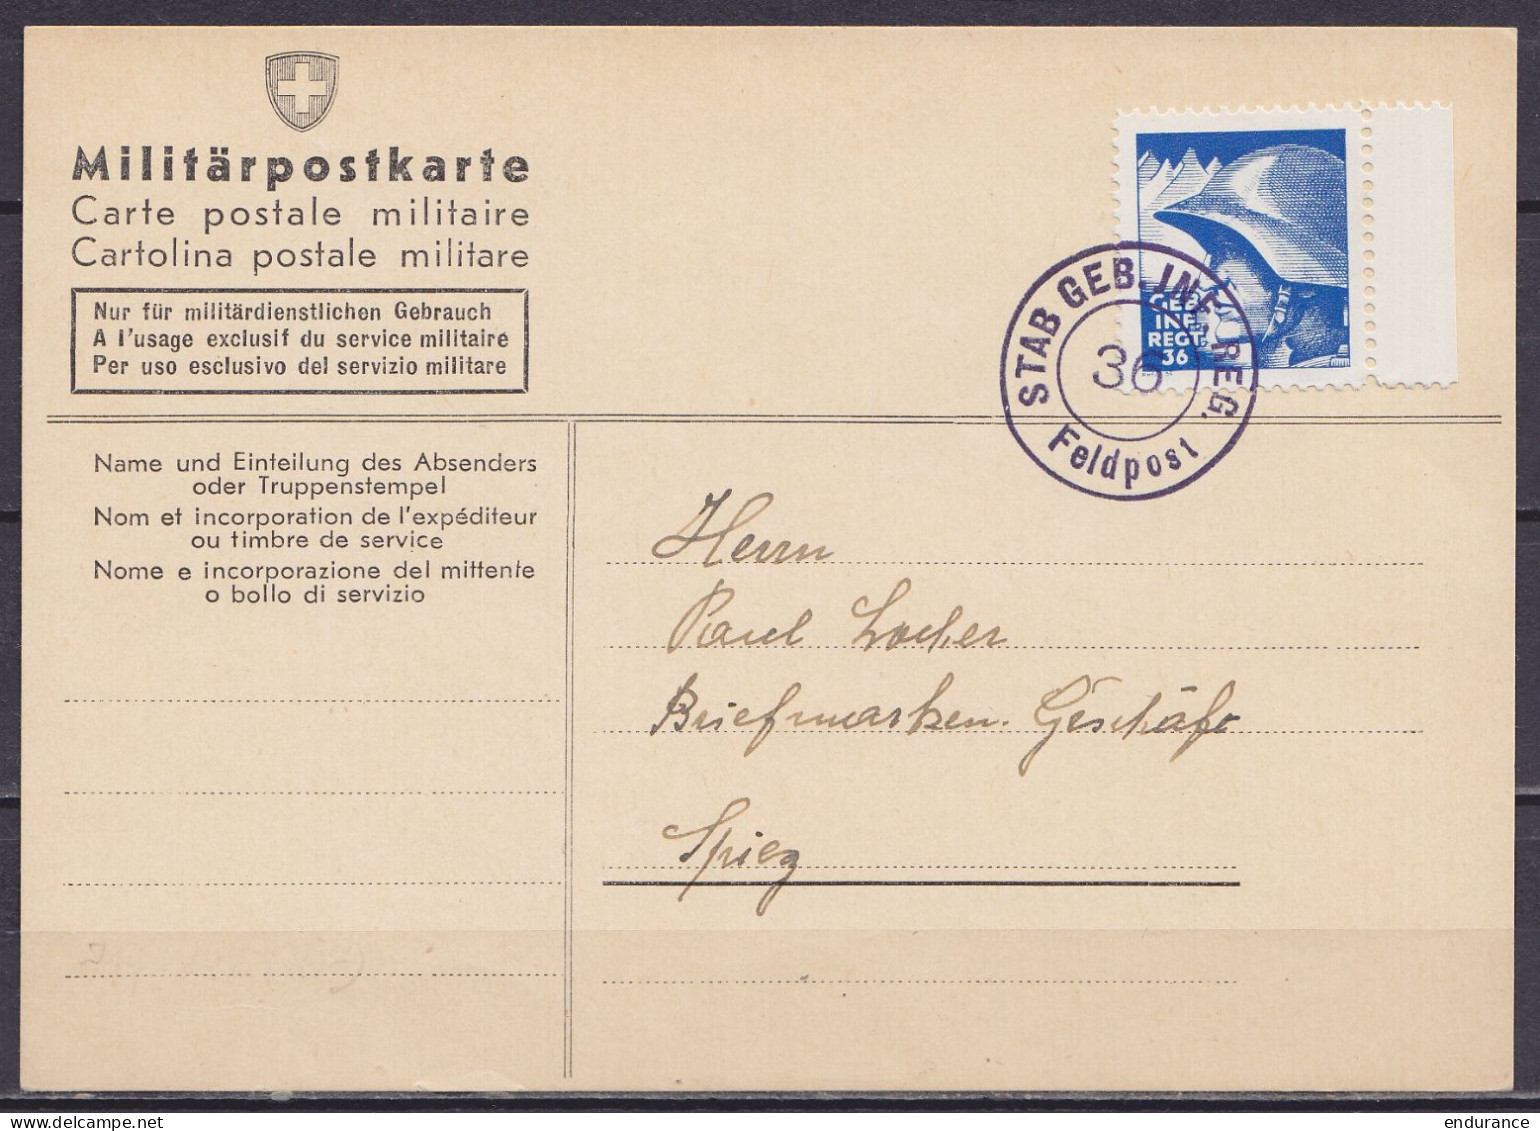 Suisse - Poste Militaire - Militärpostkarte. Affr. Vignette "GEB.INF.REGT.36" Oblit. "STAB GEB. INF.REG. /36/ Feldpost"  - Documents